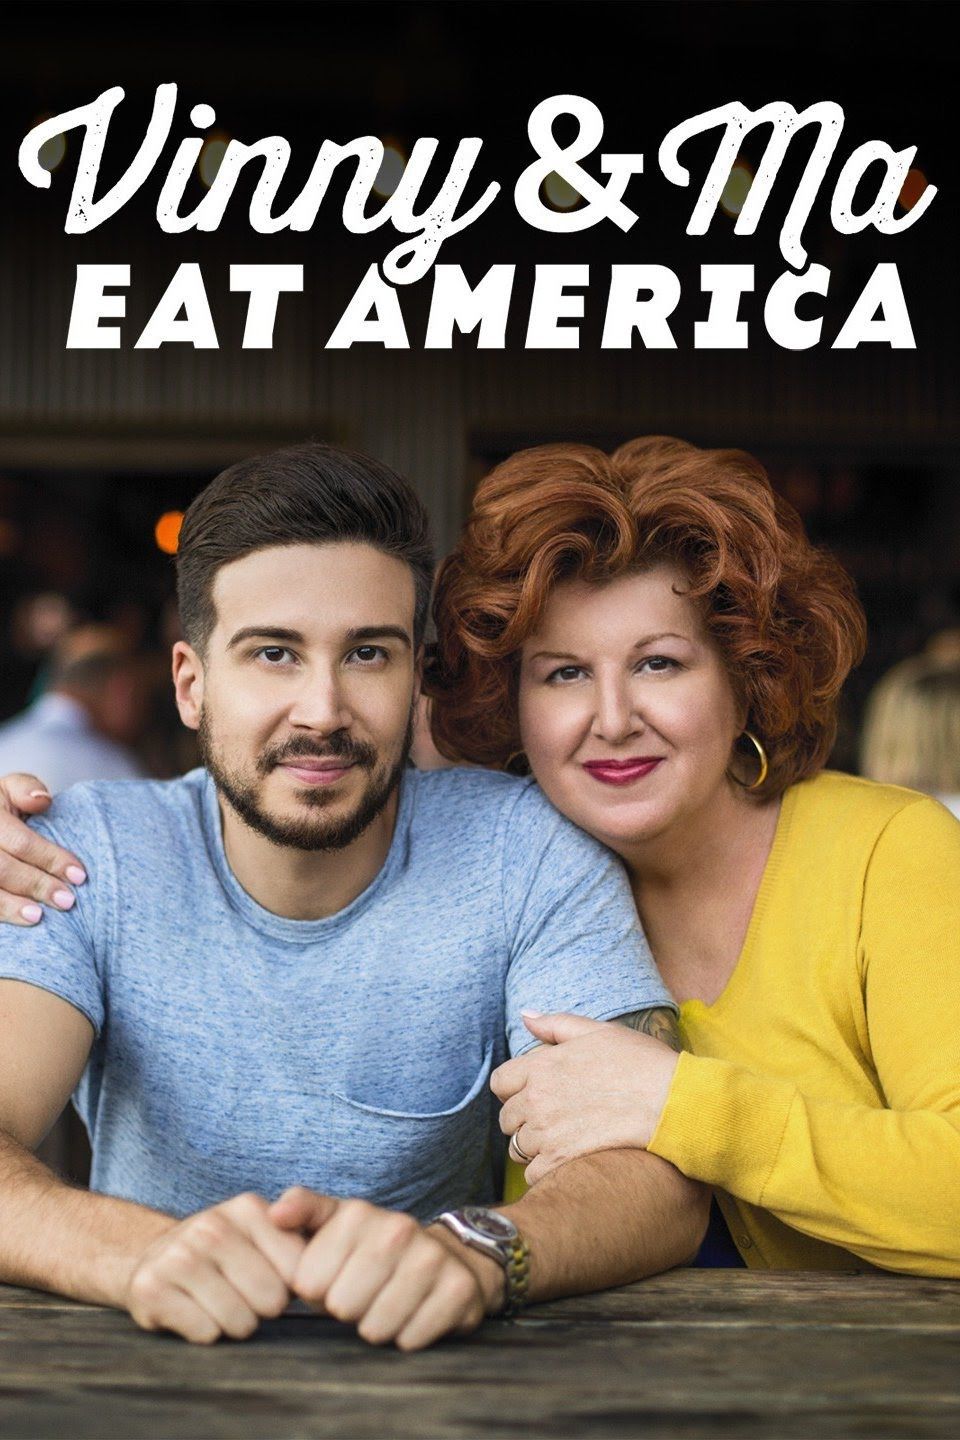 Vinny & Ma Eat America ne zaman